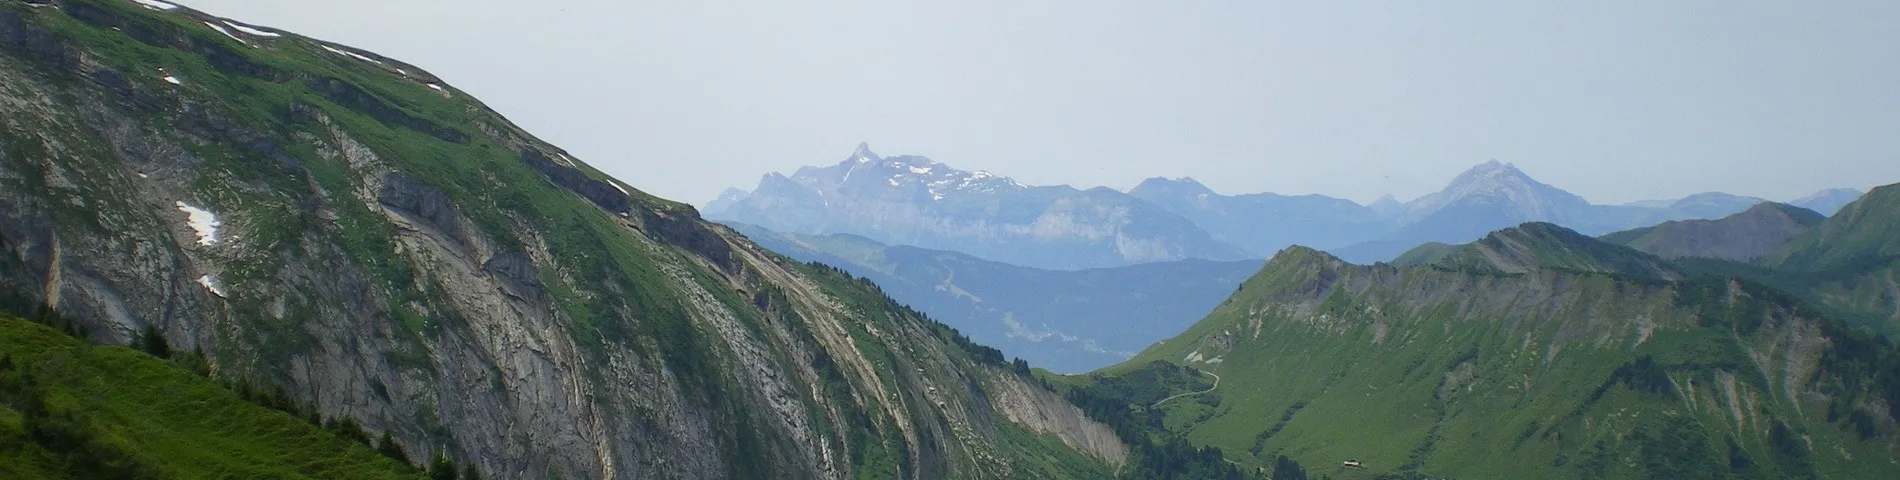 Morzine (Alpes) - 